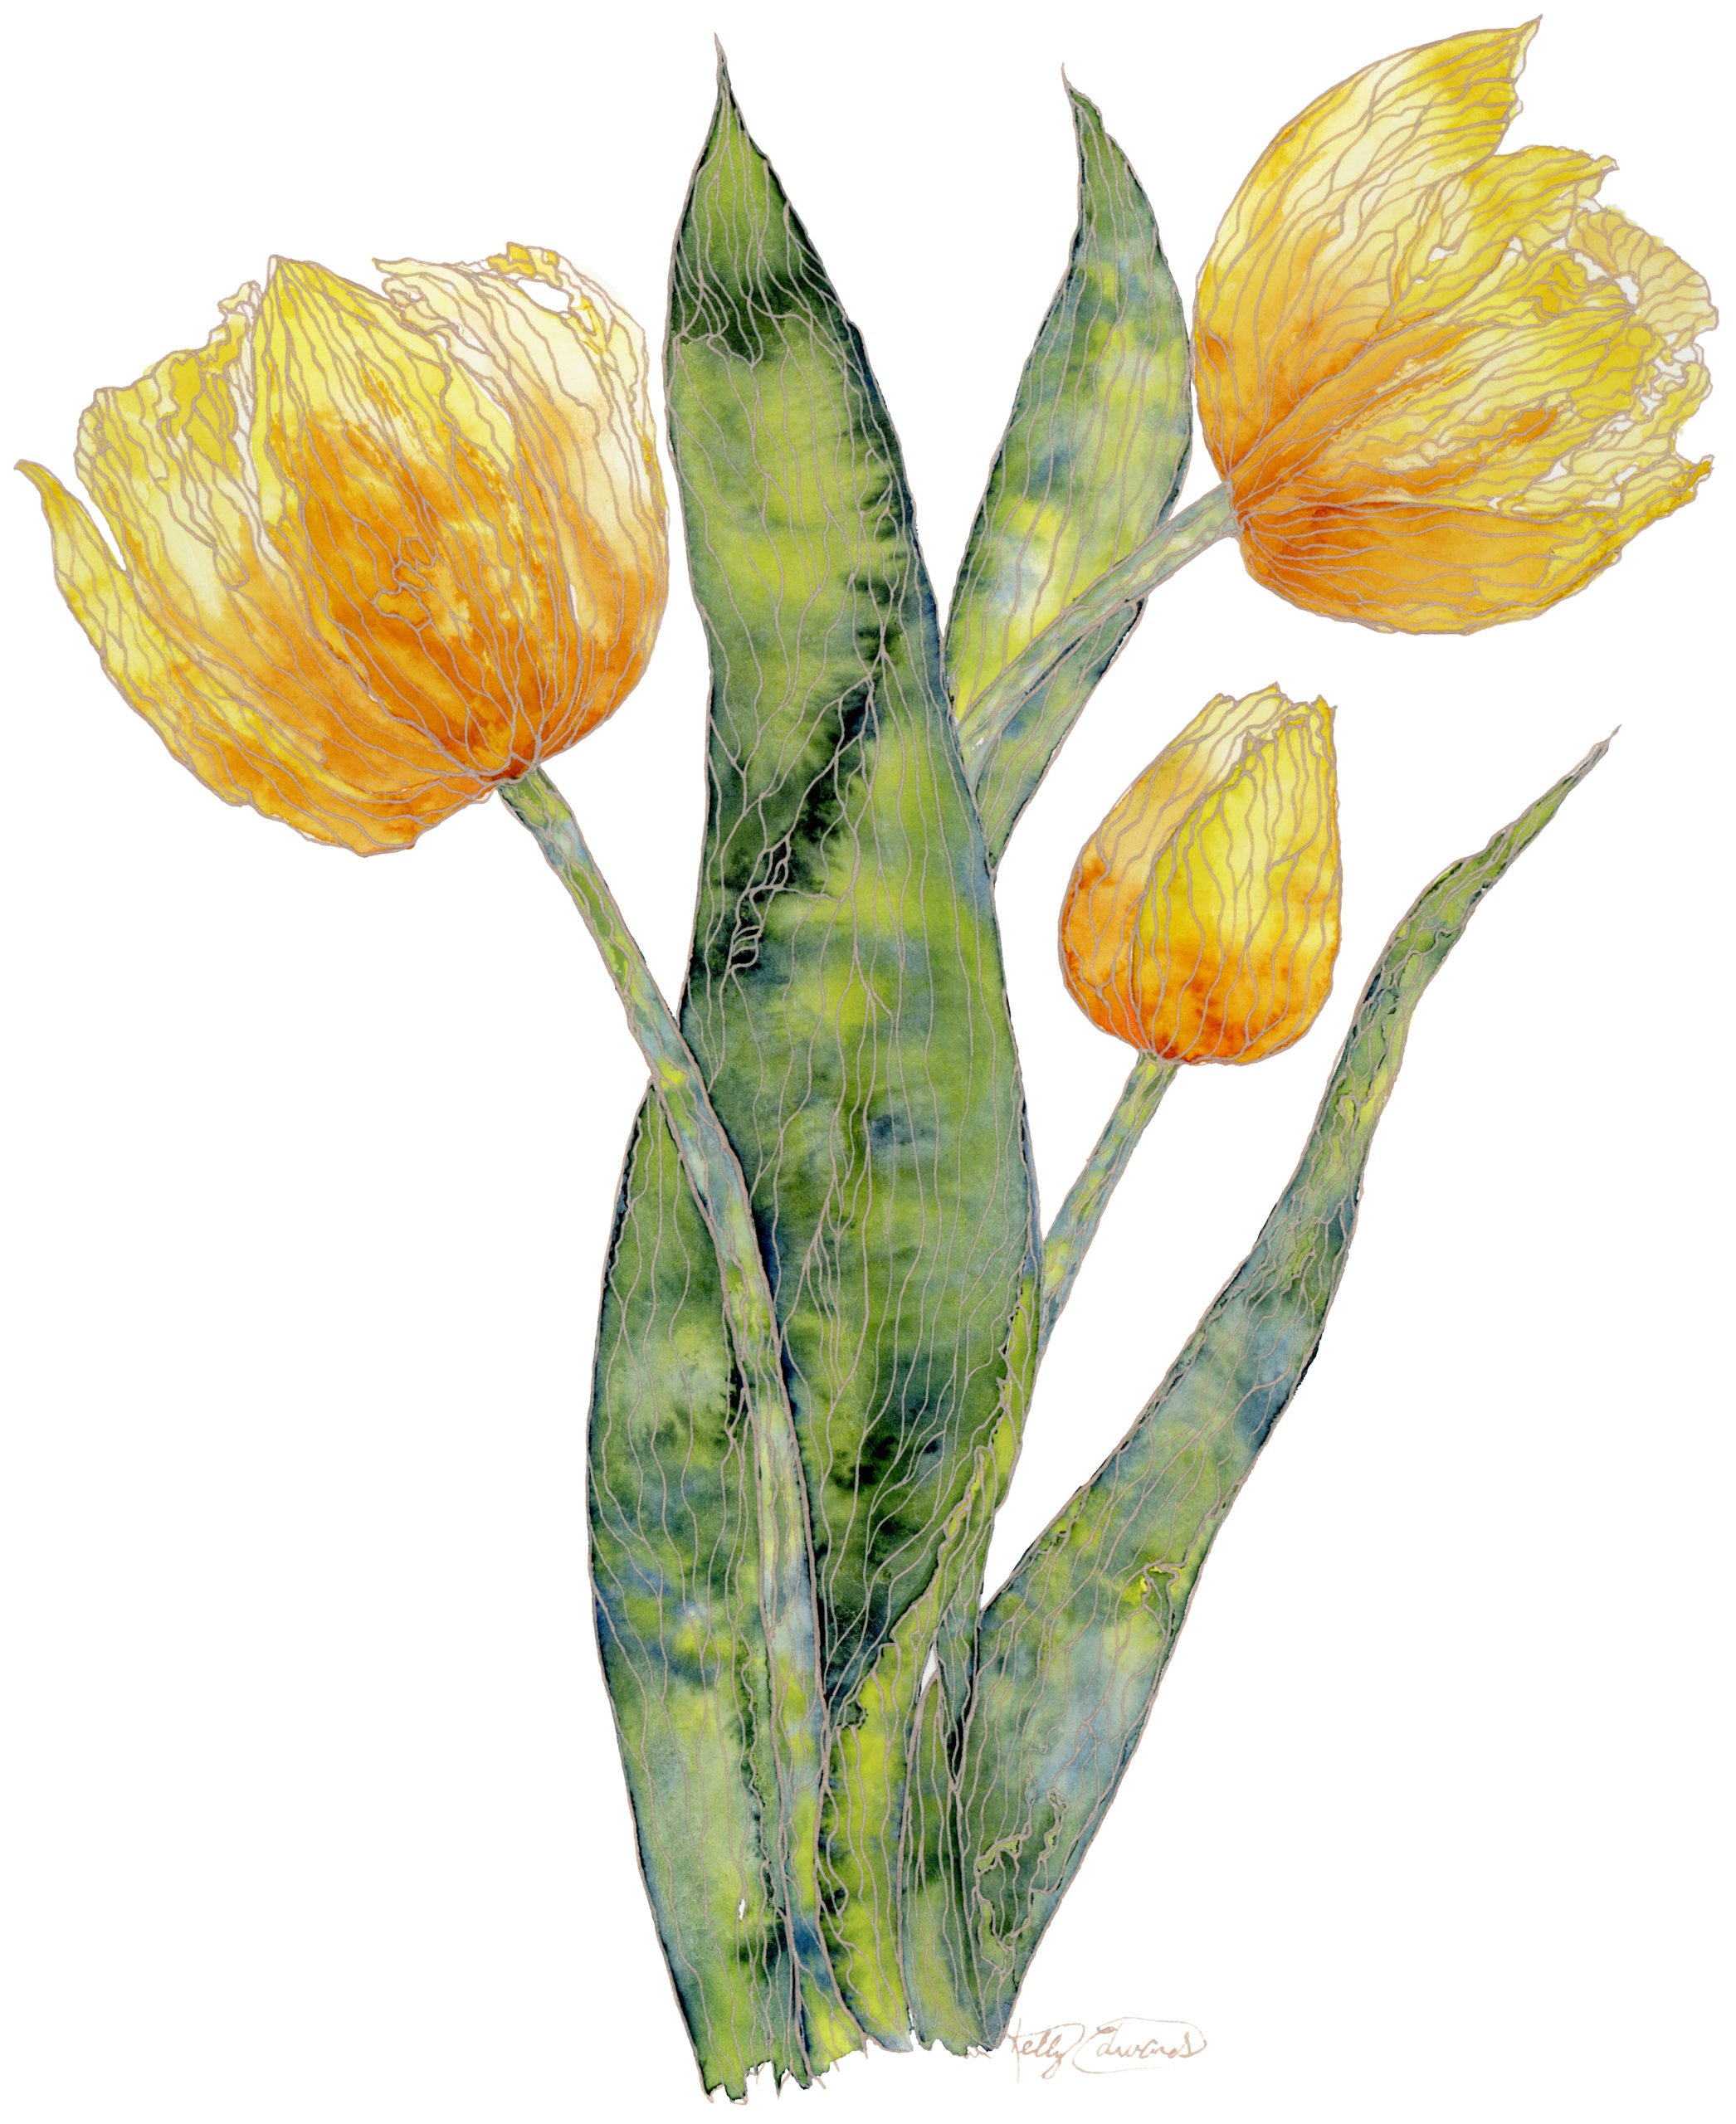 Yellow Tulips 